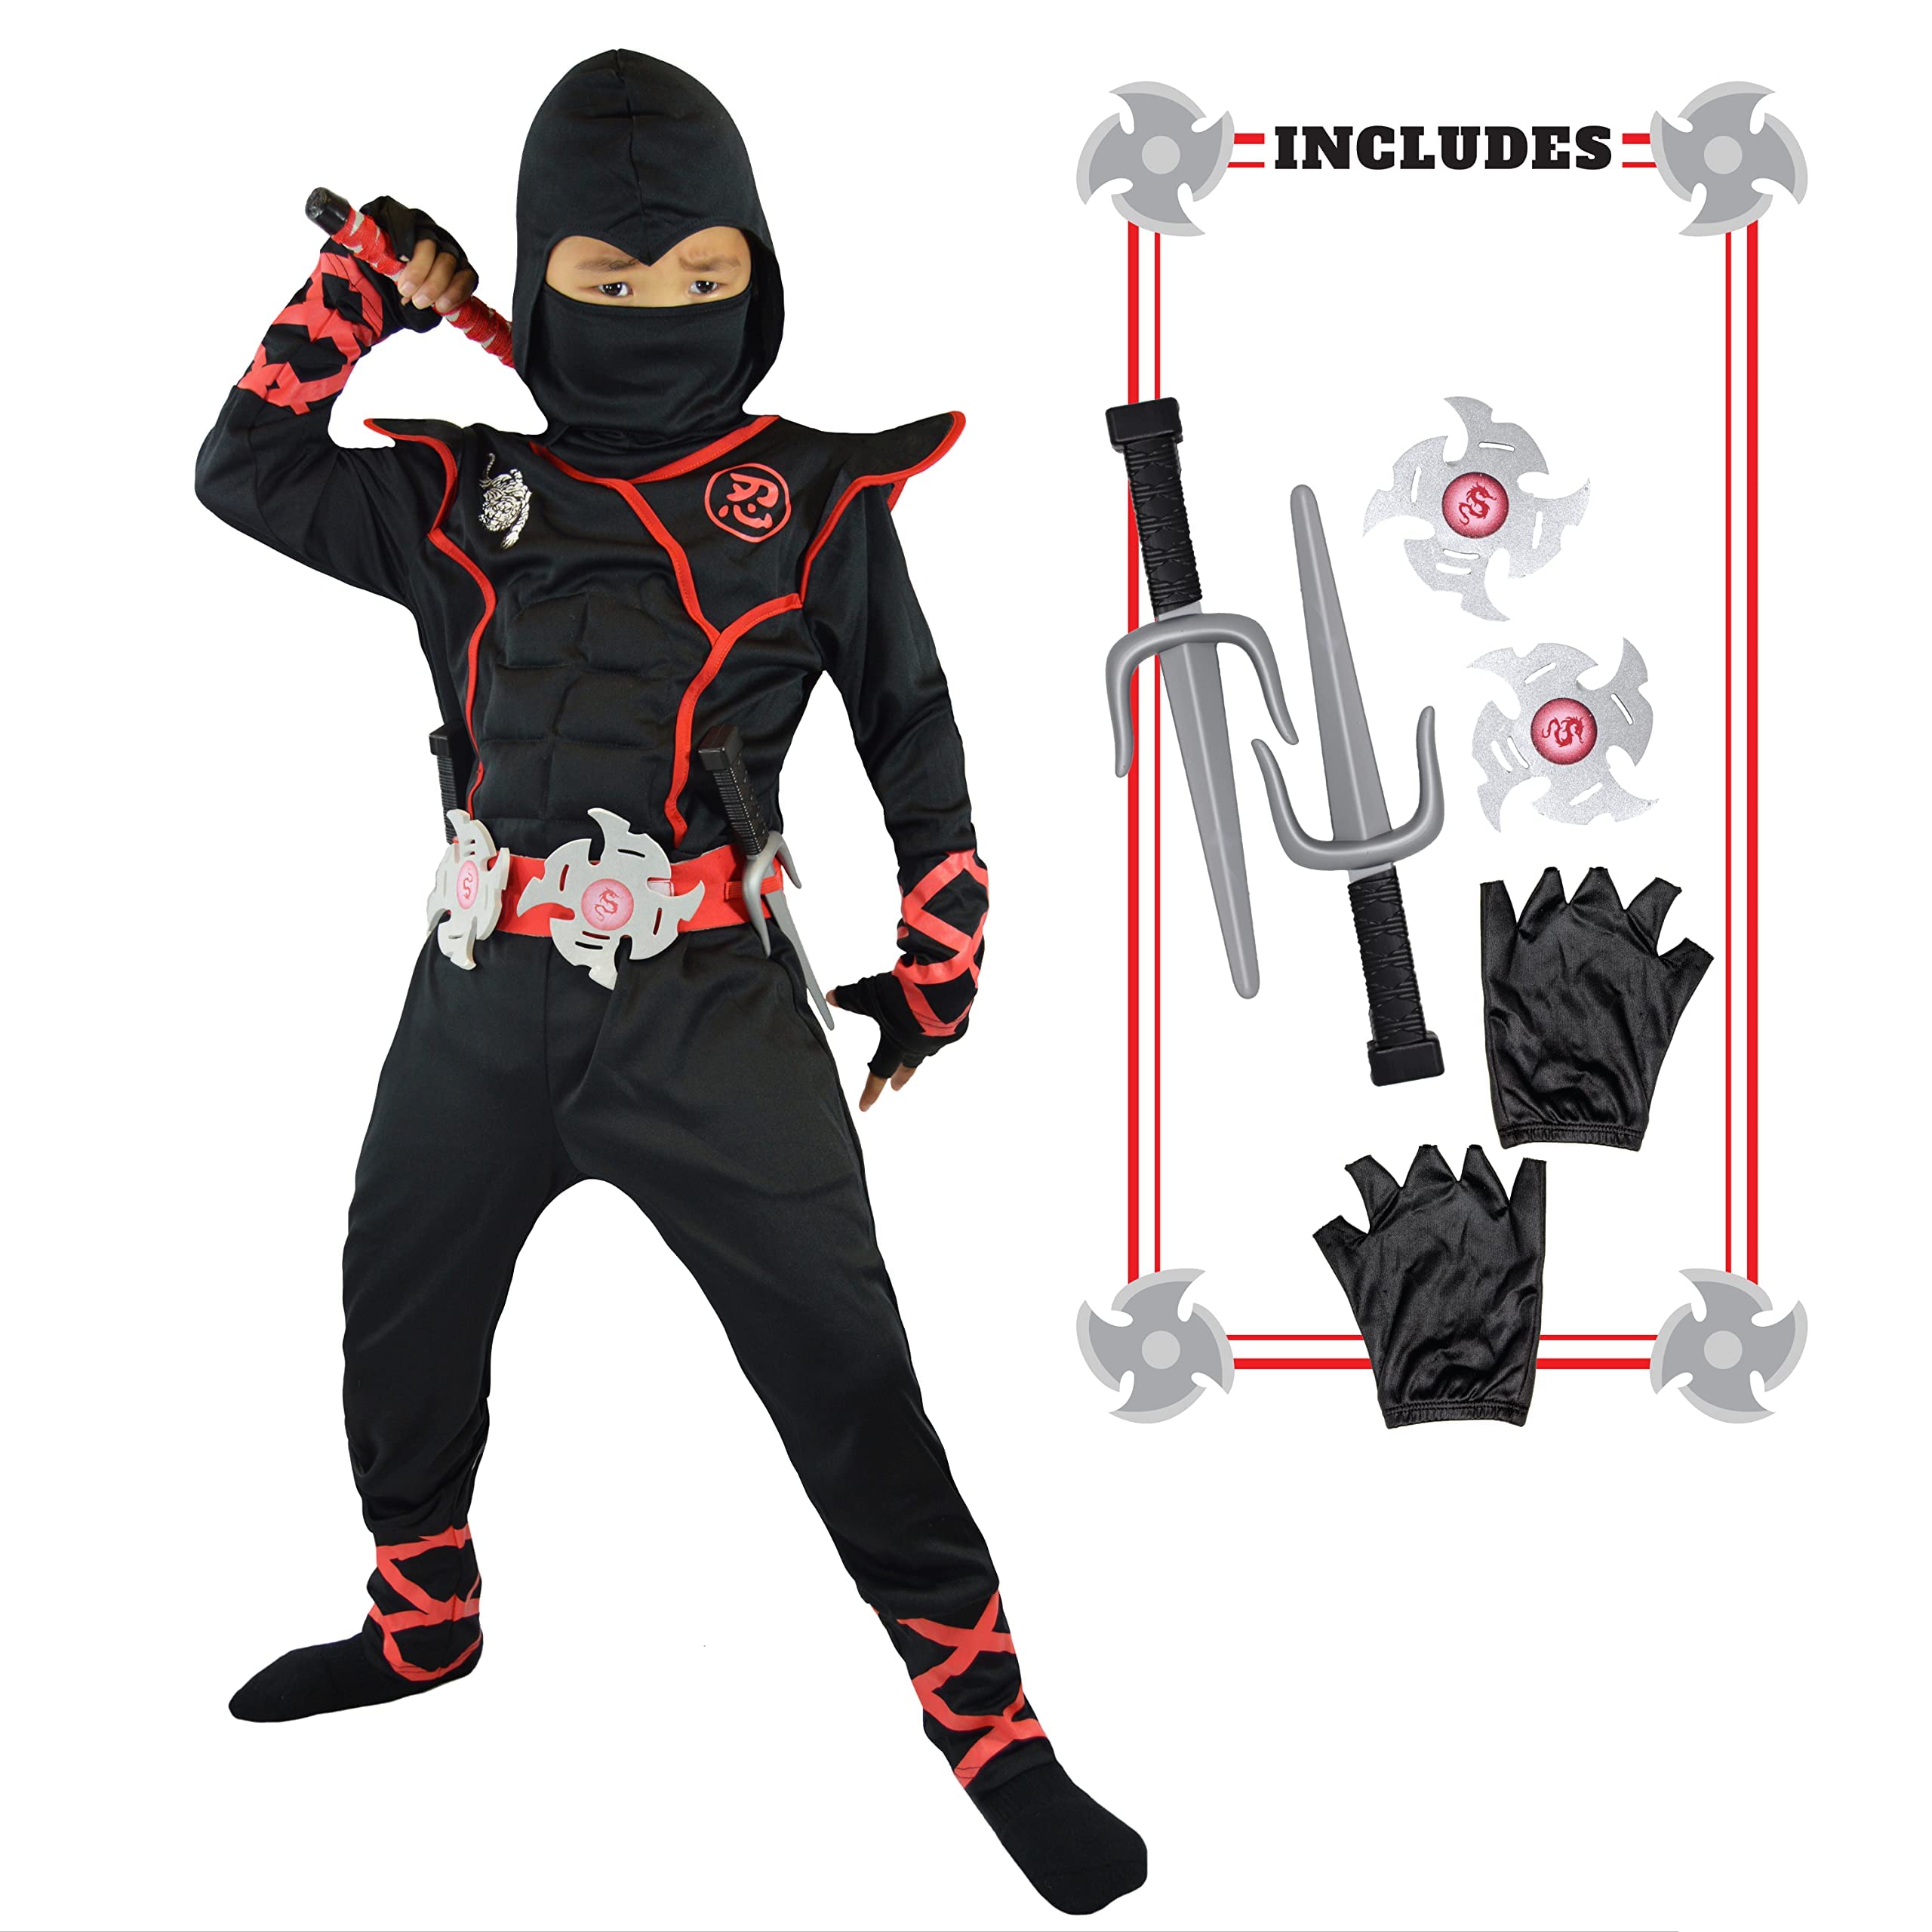 Spooktacular Creations Ninja Costume for Kids, Black Deluxe Ninja Costume for Boys Halloween Ninja Costume Dress Up (Black, Todd